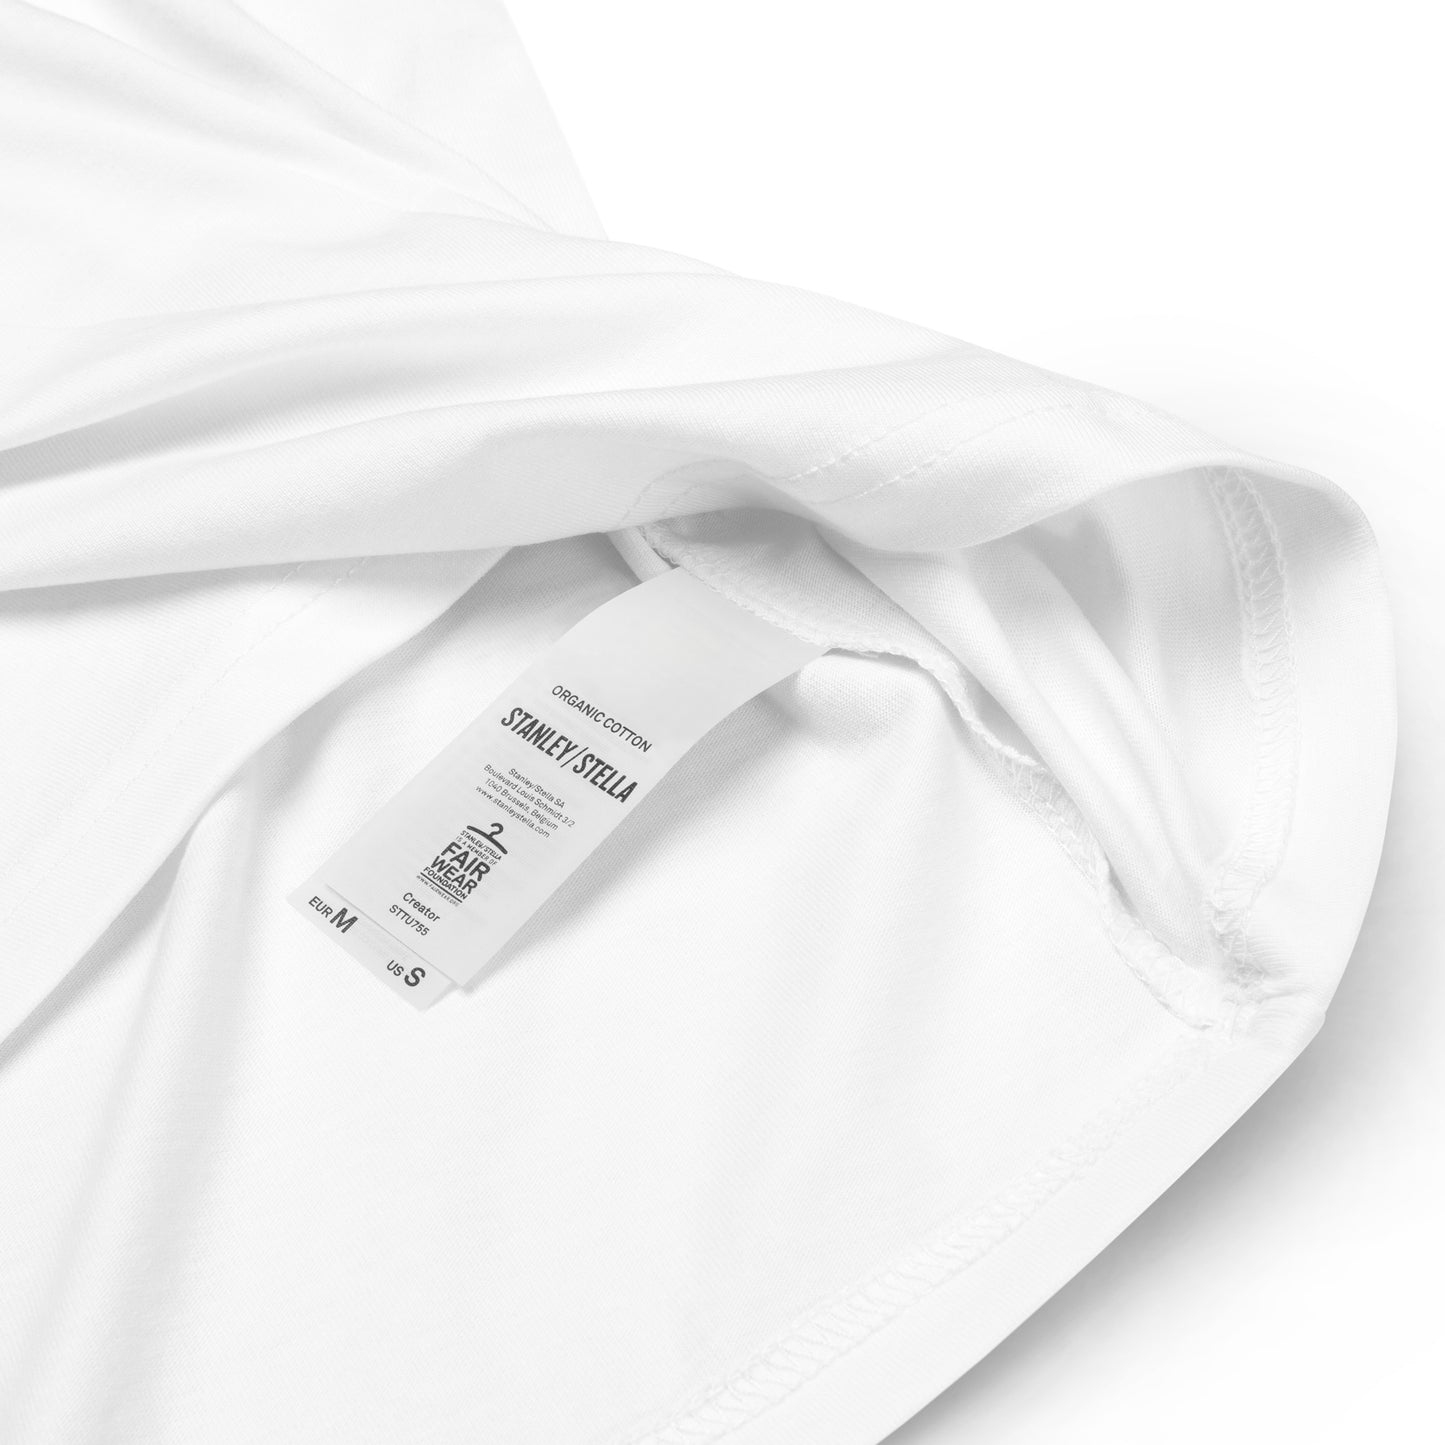 Neduz Verb Tense Matters Organic Cotton Tee - Eco-Friendly Unisex Grammar T-Shirt